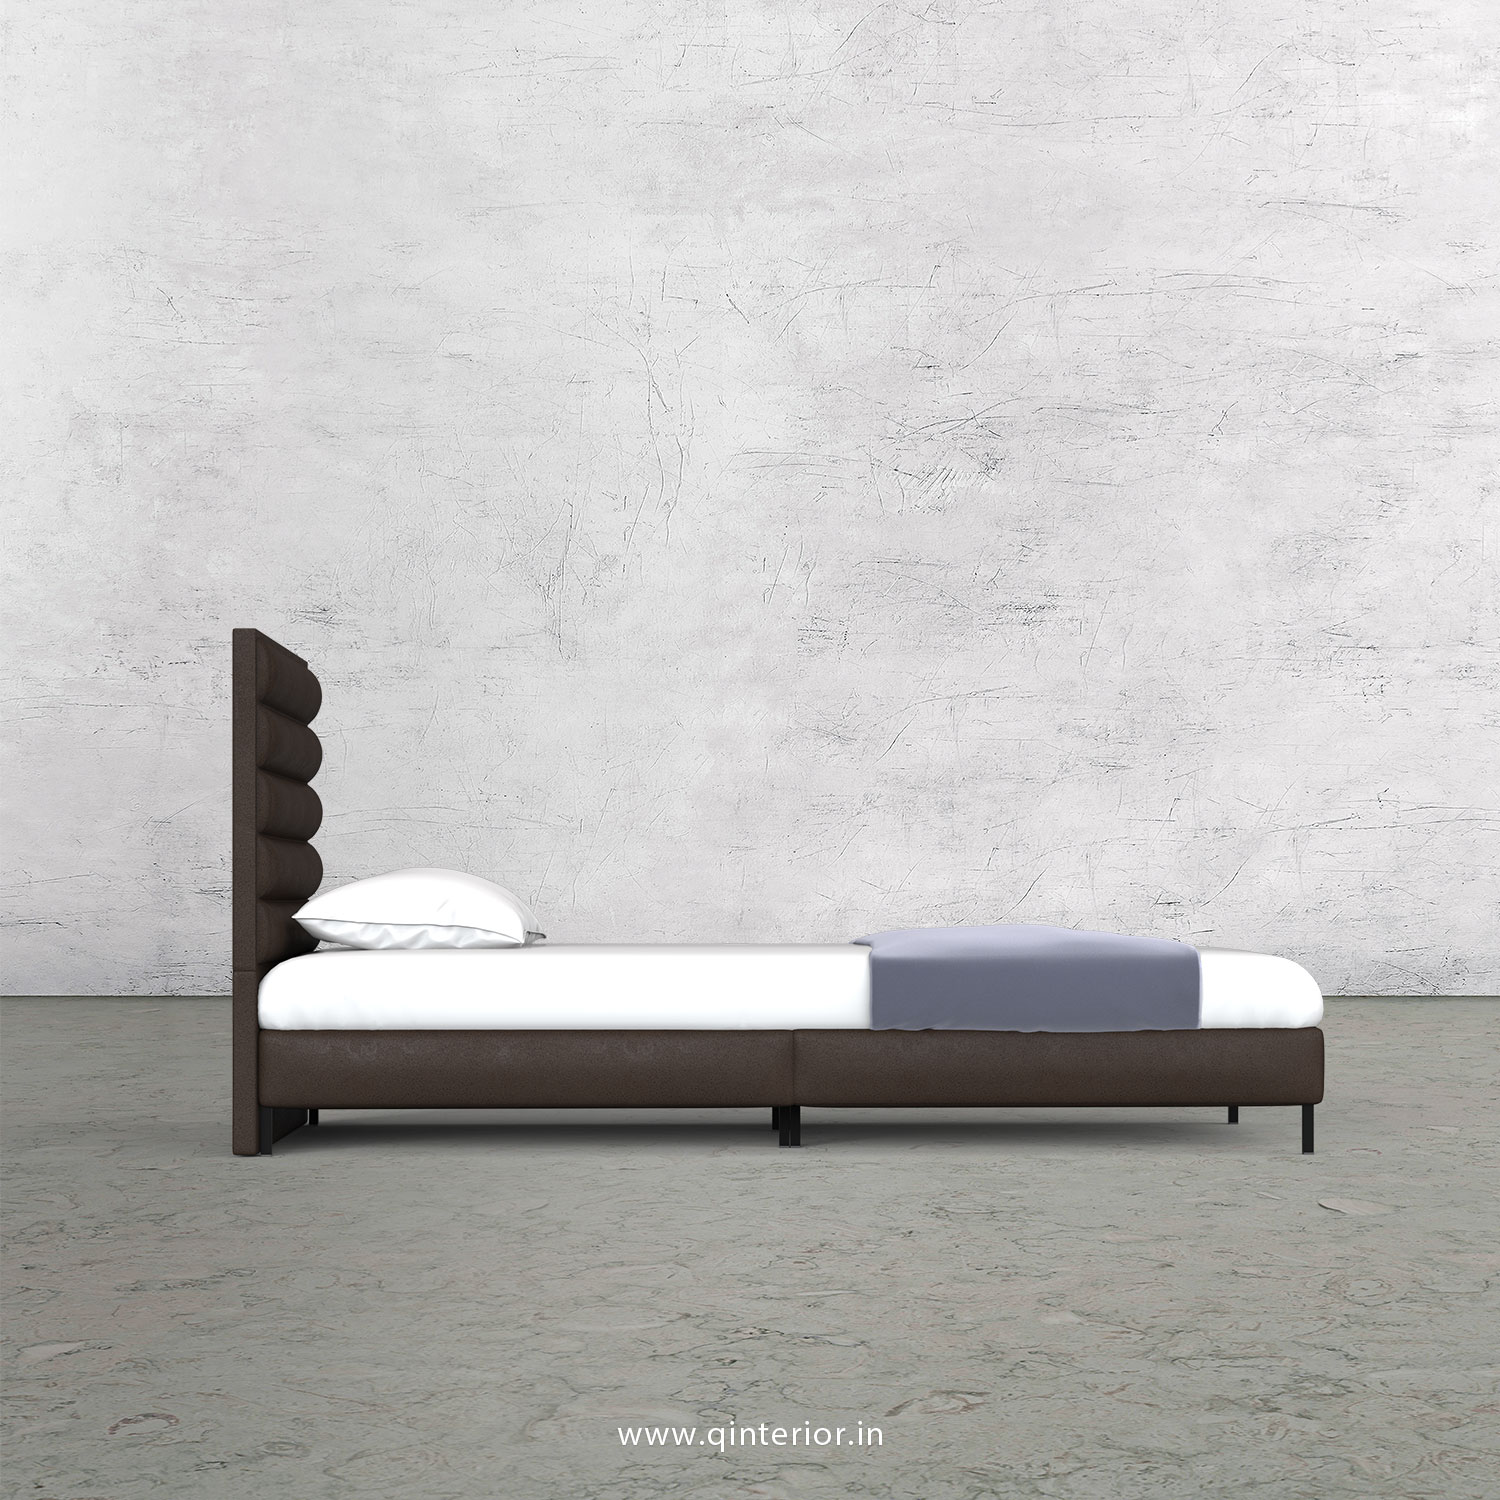 Crux Single Bed in Fab Leather – SBD003 FL16